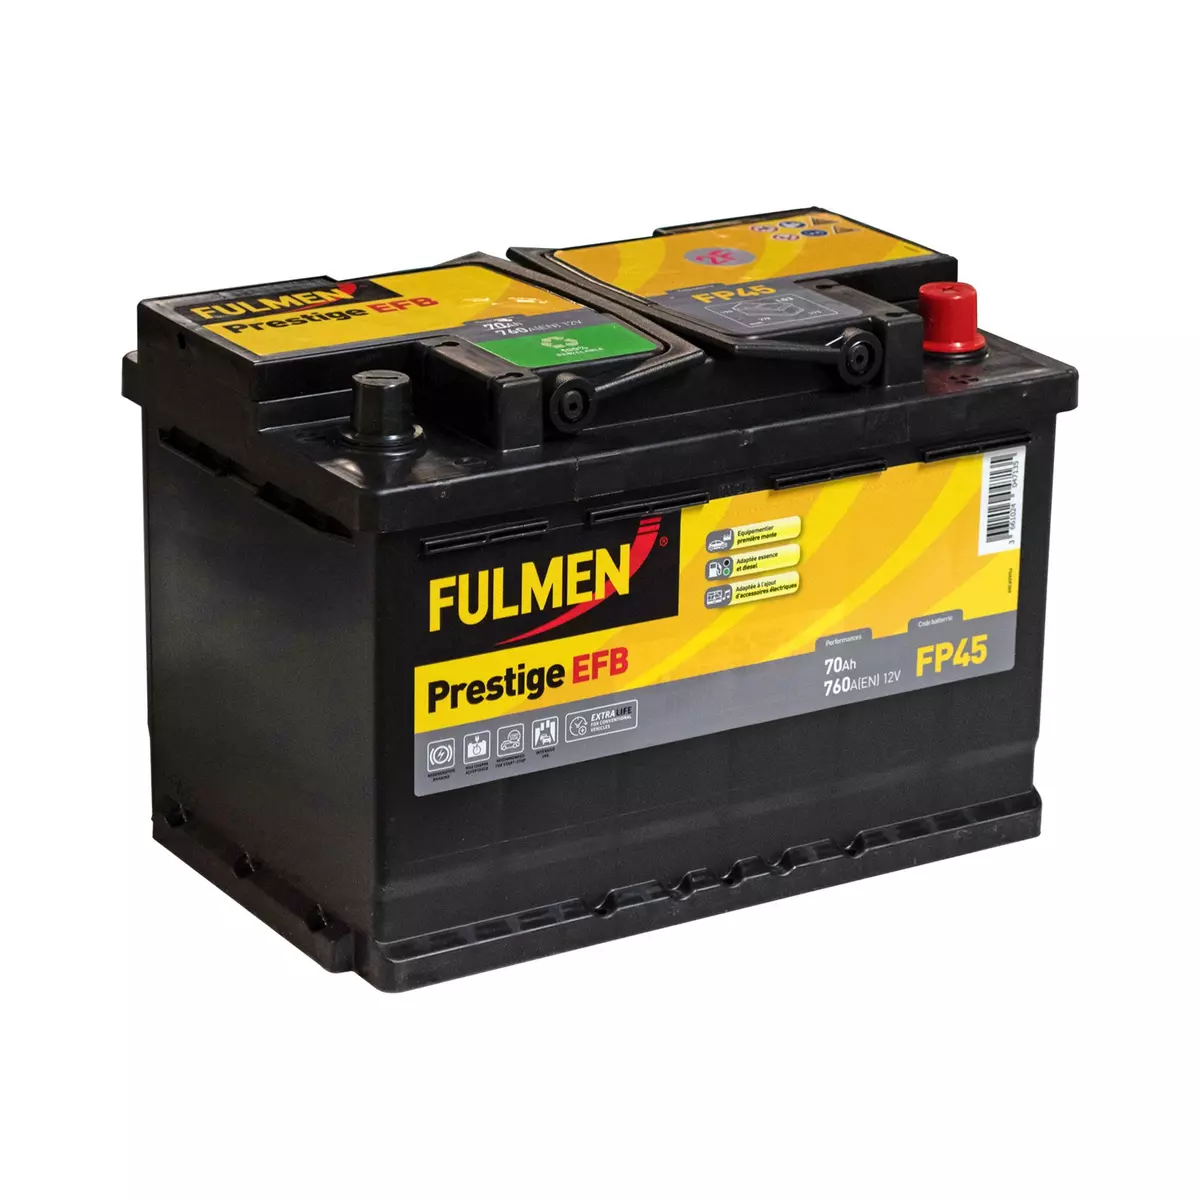 FULMEN Batterie 760A FP45 70Ah L3 EFB